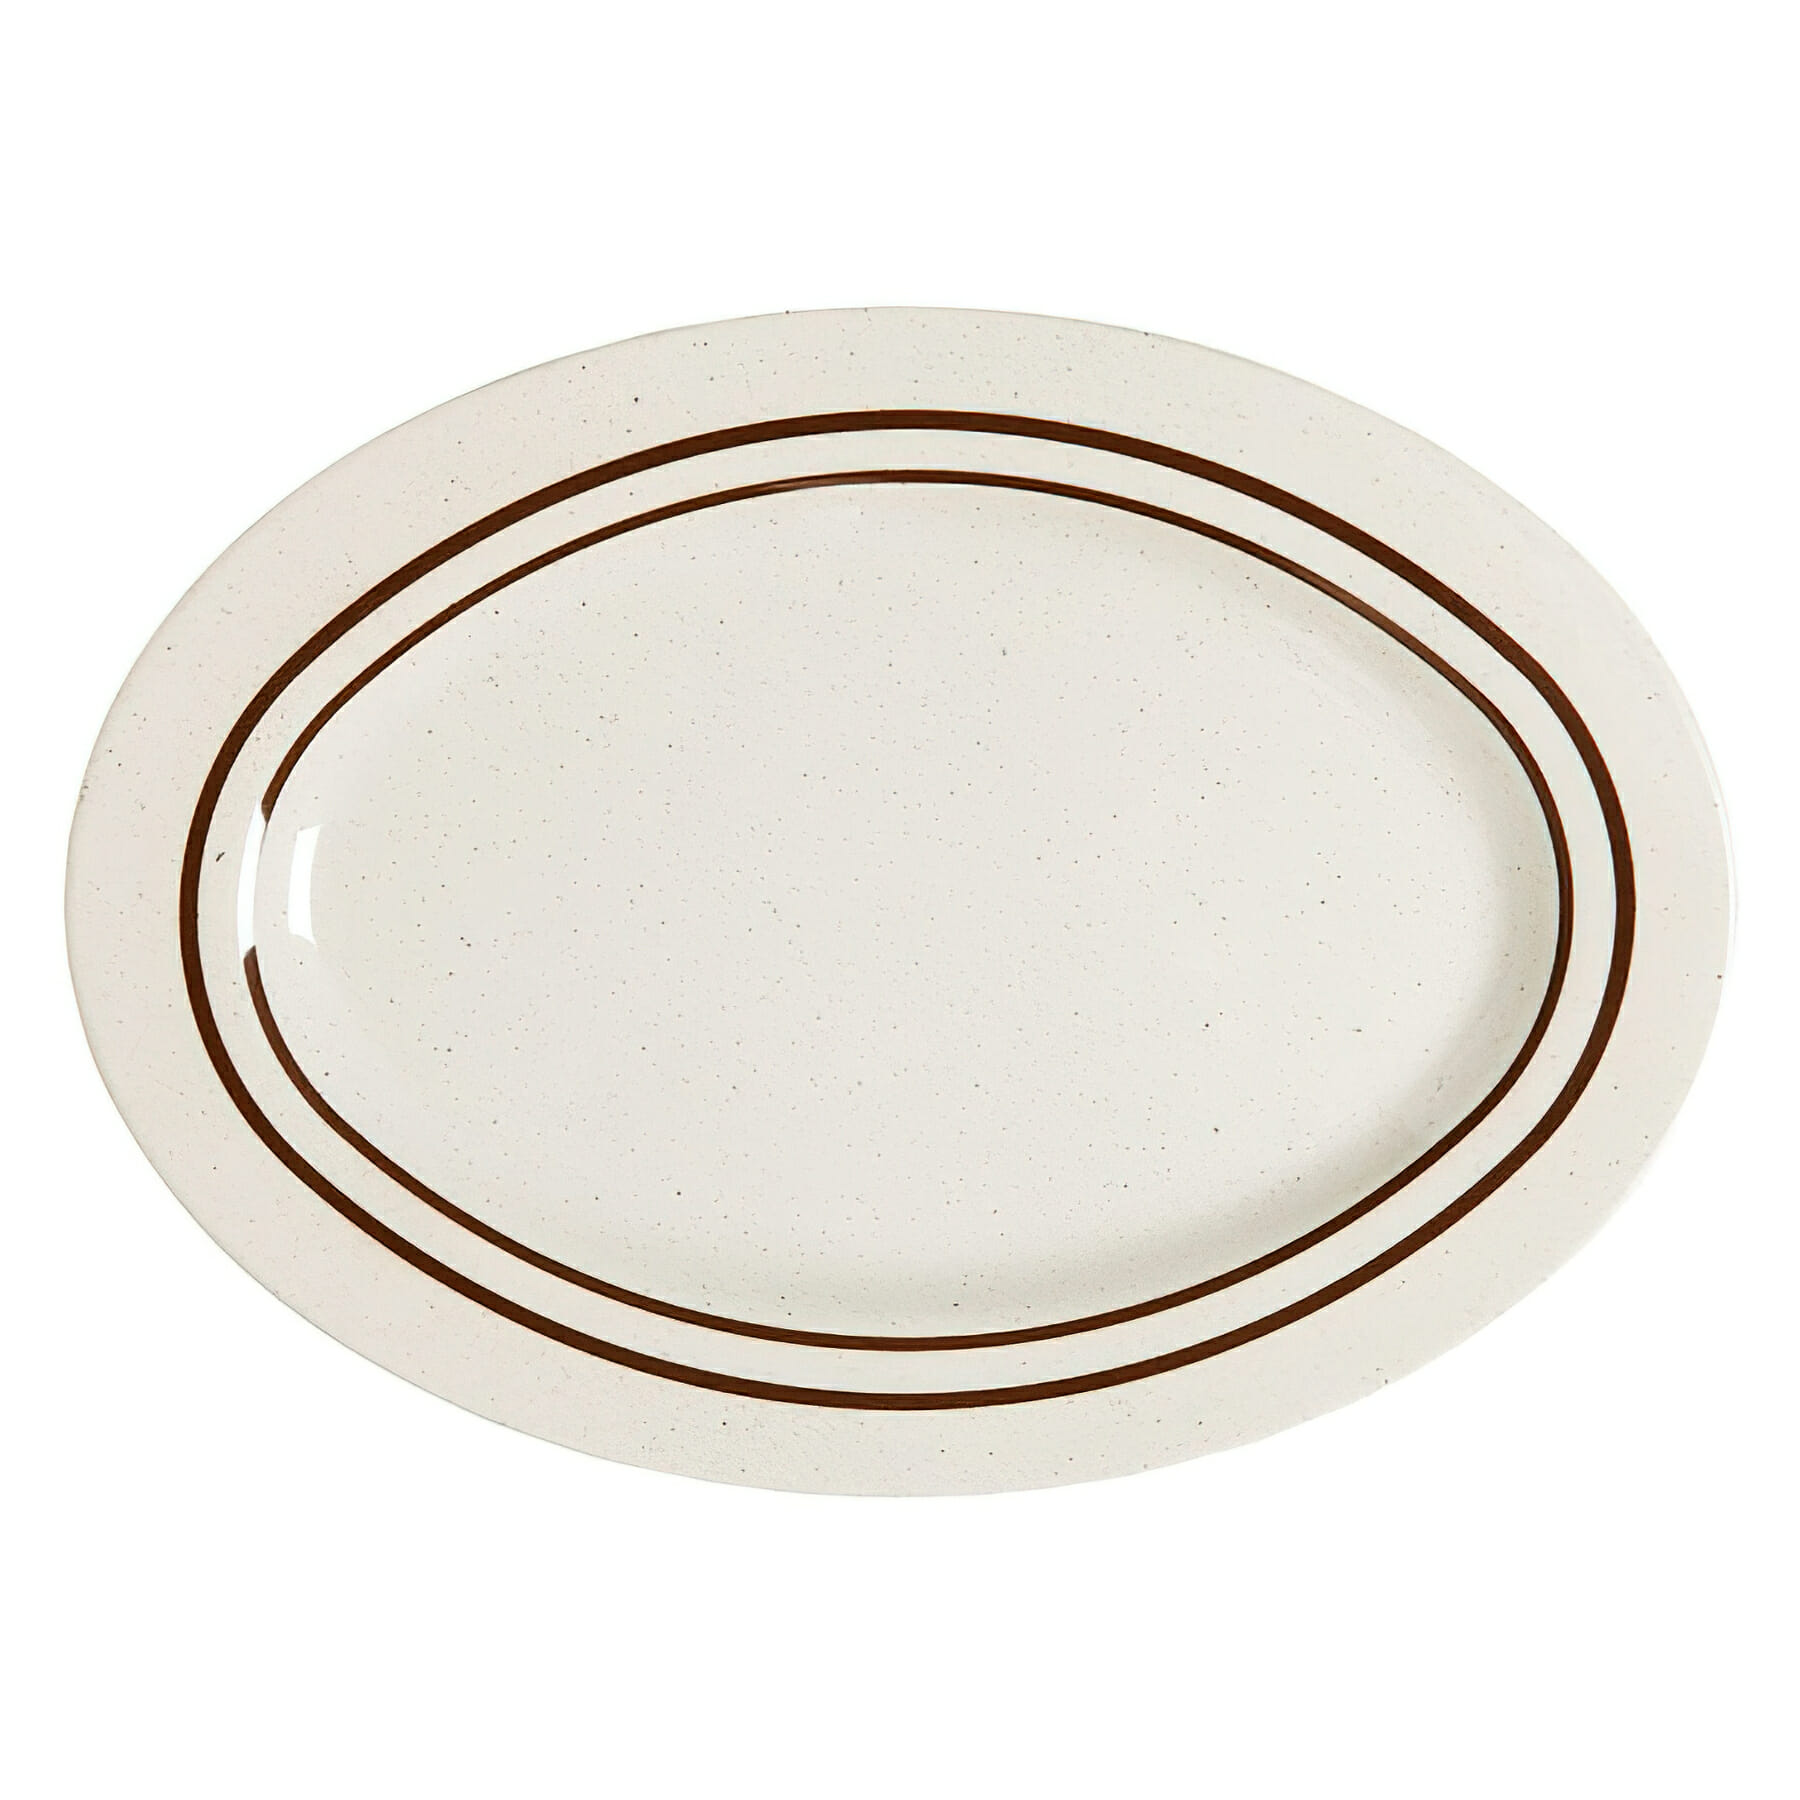 16.25" x 12" Oval Platter